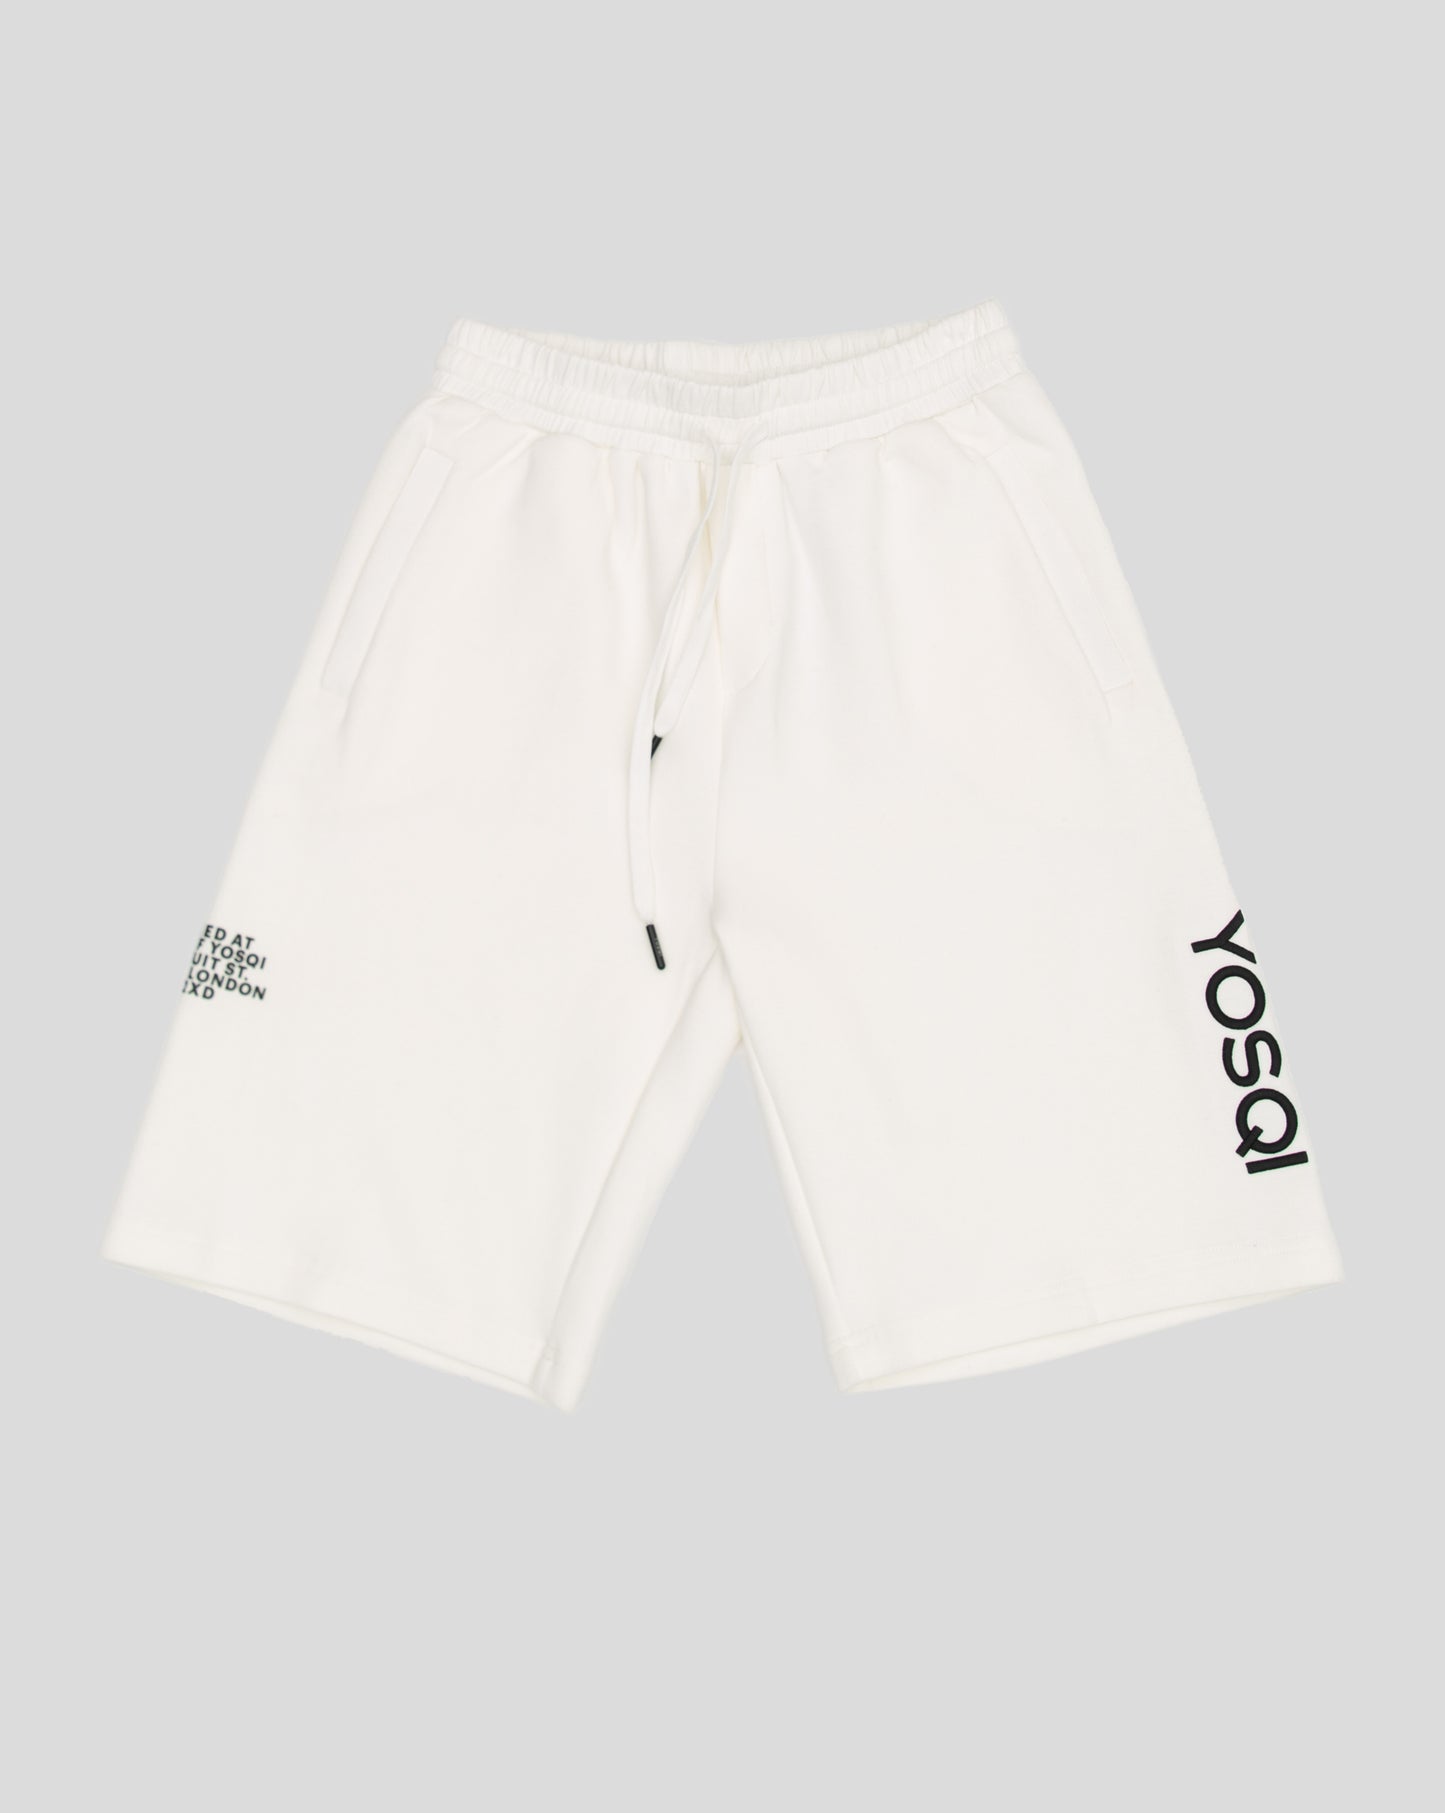 Embroidered YOSQI Shorts (White)